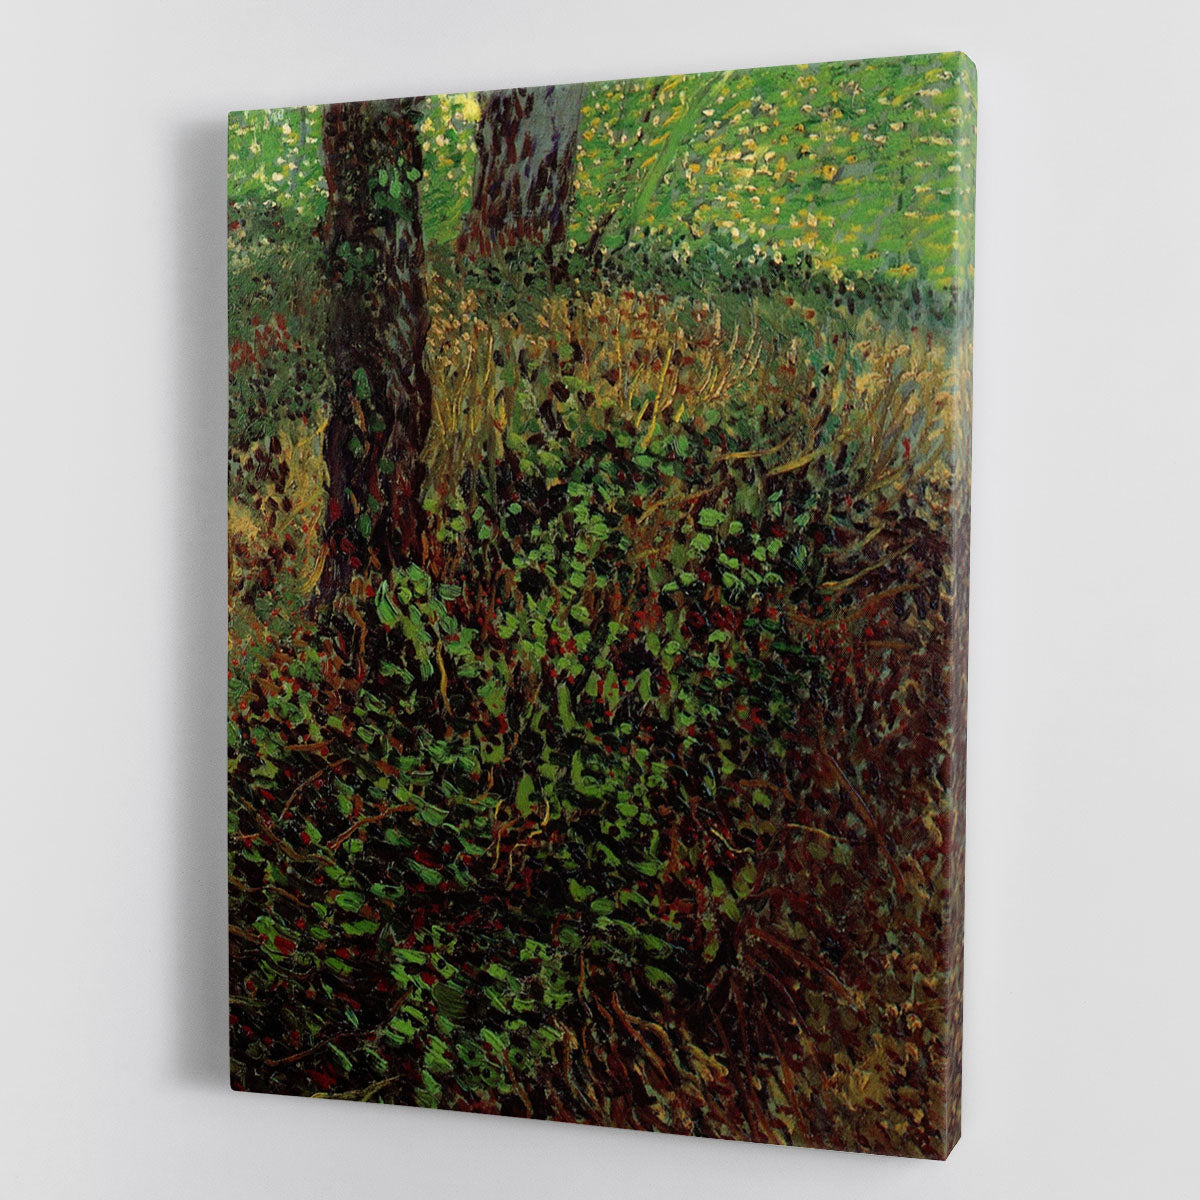 Undergrowth by Van Gogh Canvas Print or Poster - Canvas Art Rocks - 1